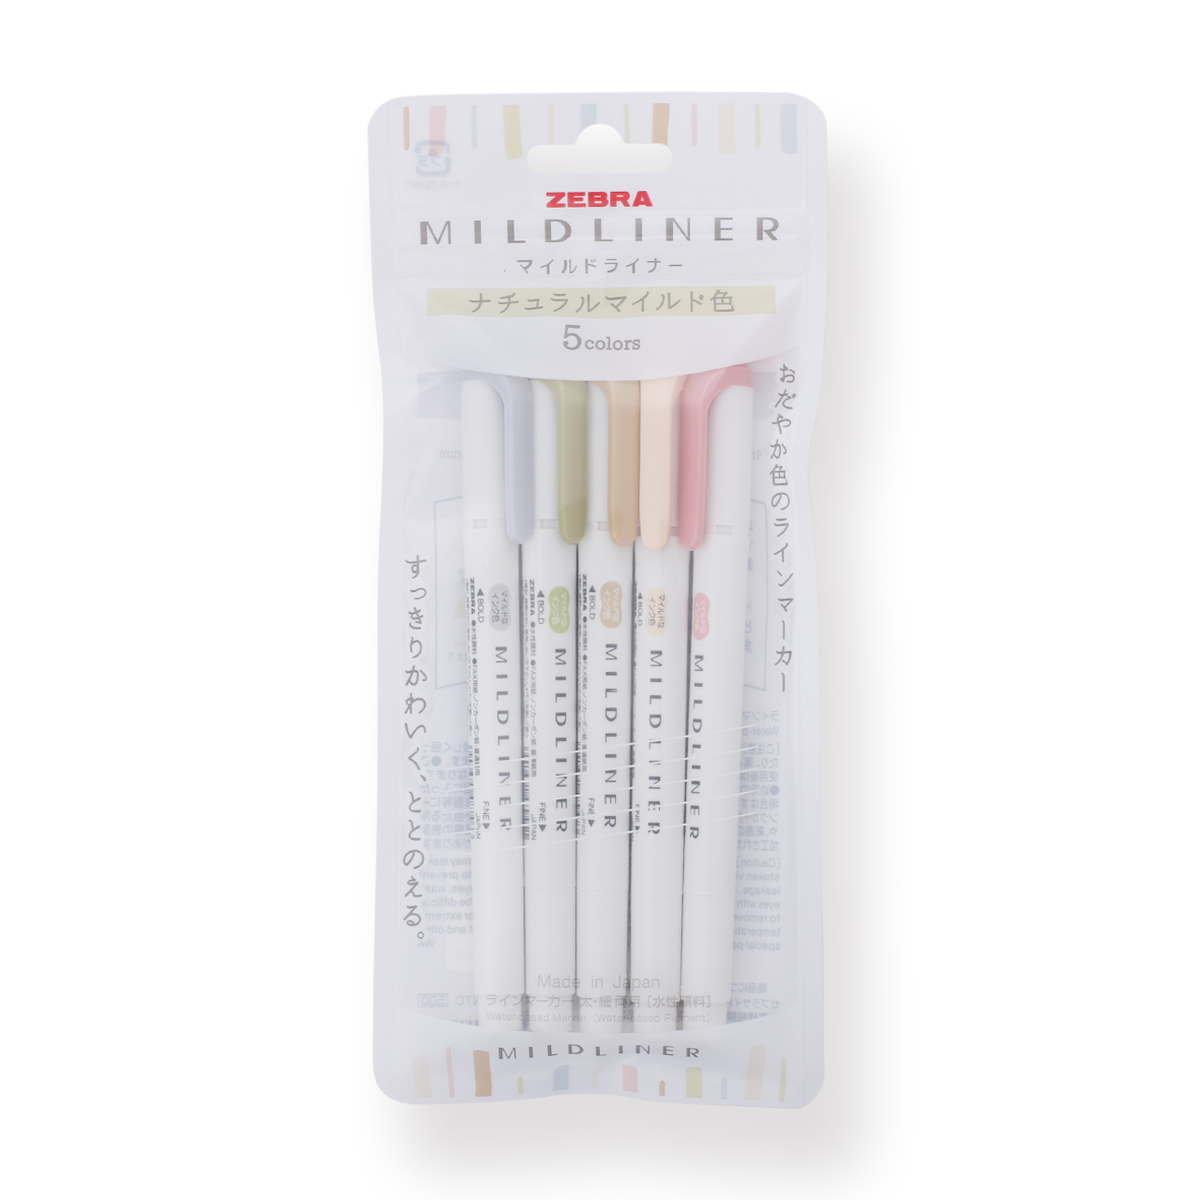 Zebra Pen Lettering Set, Includes 6 Mildliner Highlighters and 6 Brush Pen,  Assorted Colors, 12 Pack